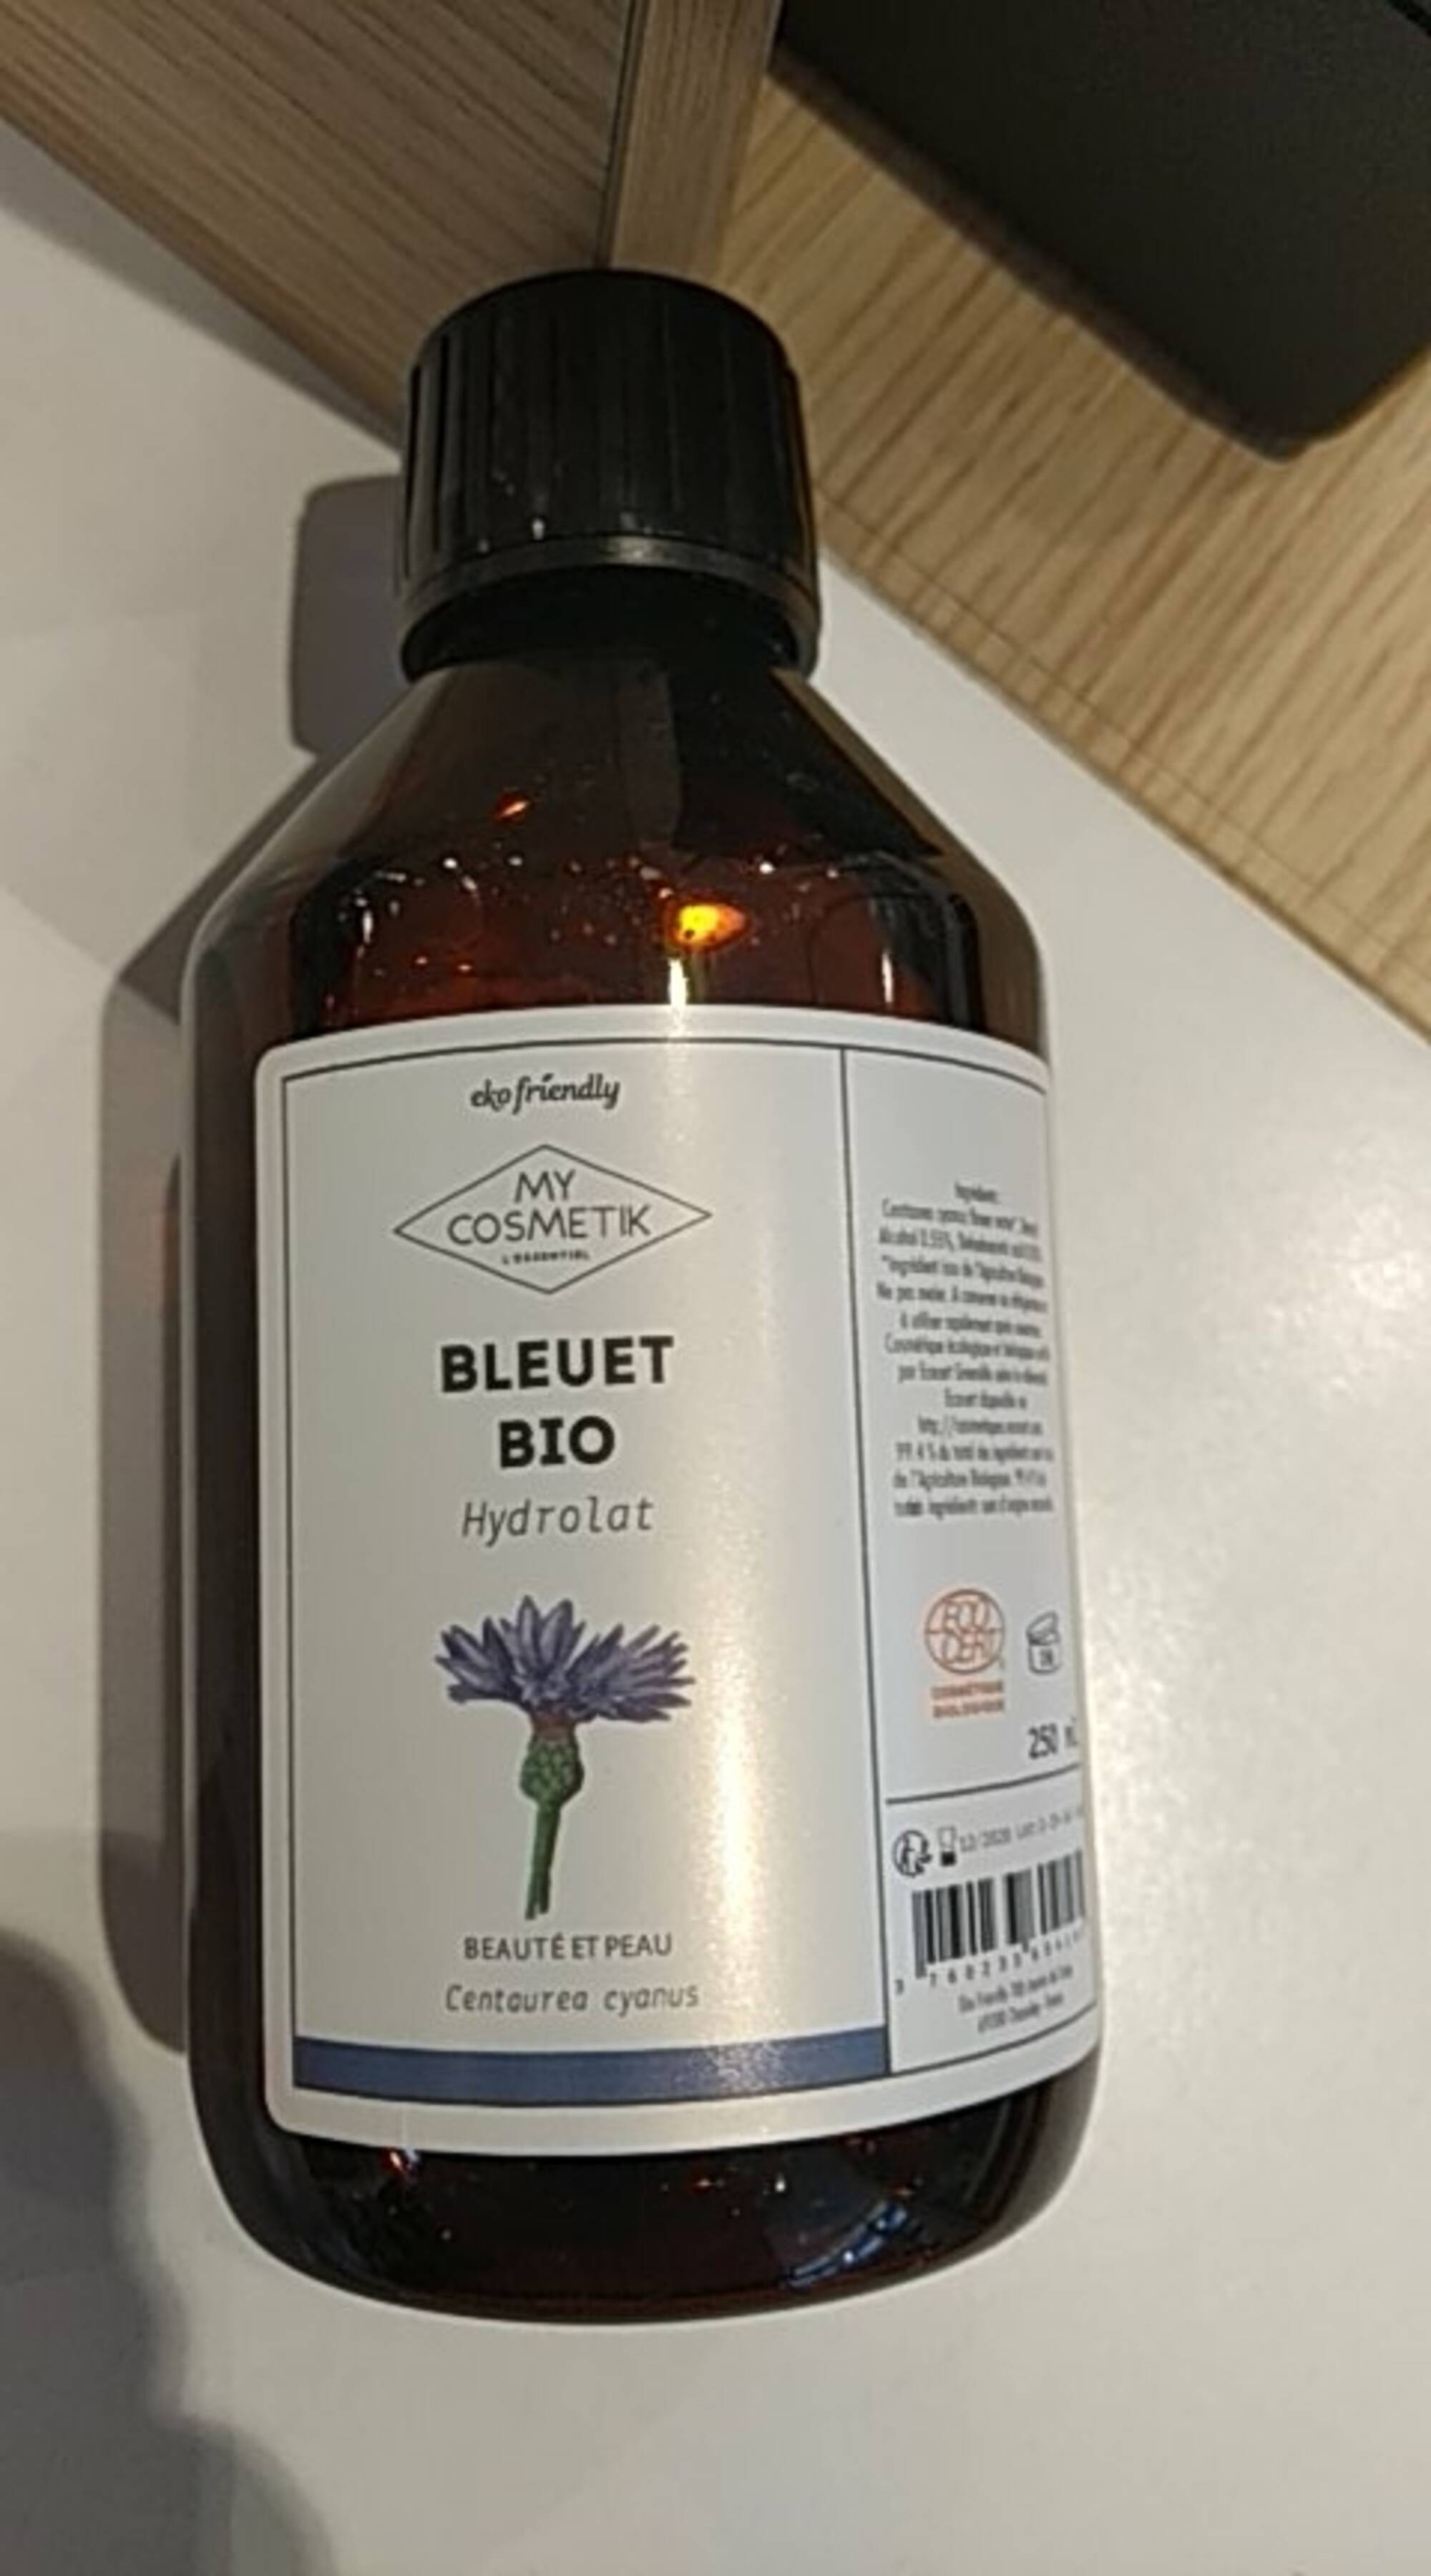 MY COSMETIK - Bleuet bio hydrolat